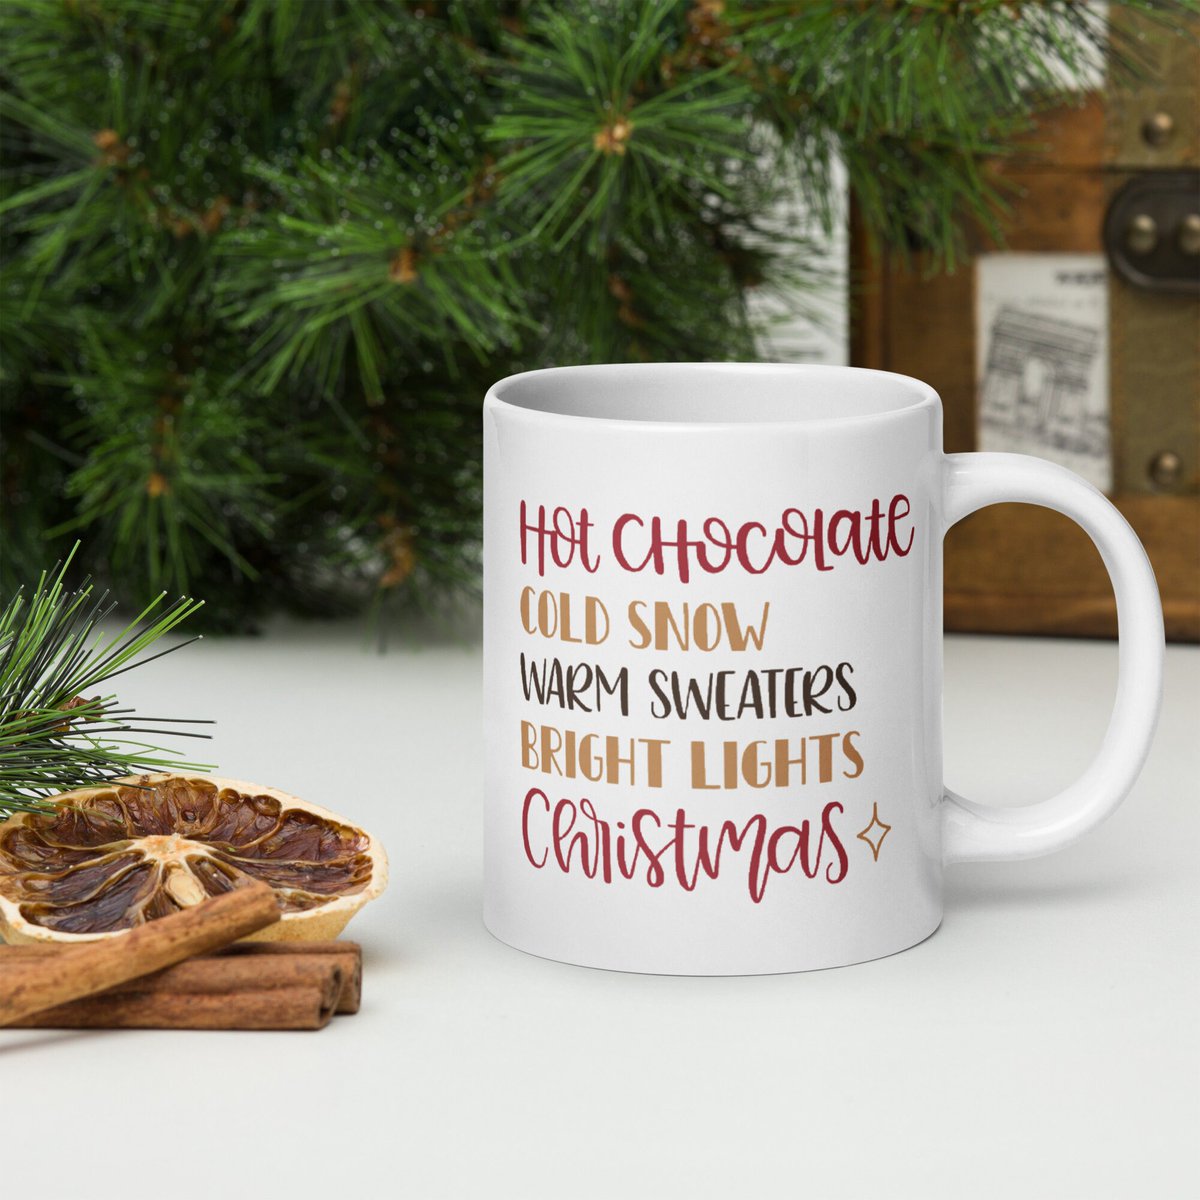 Hot Chocolate White glossy mug, coffee mug, Christmas, gift ideas, Holiday Mugs tuppu.net/6a92cff5 #FourthofJuly #Etsy #FathersDay #EtsyShop #MothersDay #HandmadeGifts #MemorialDay #GiftIdeas